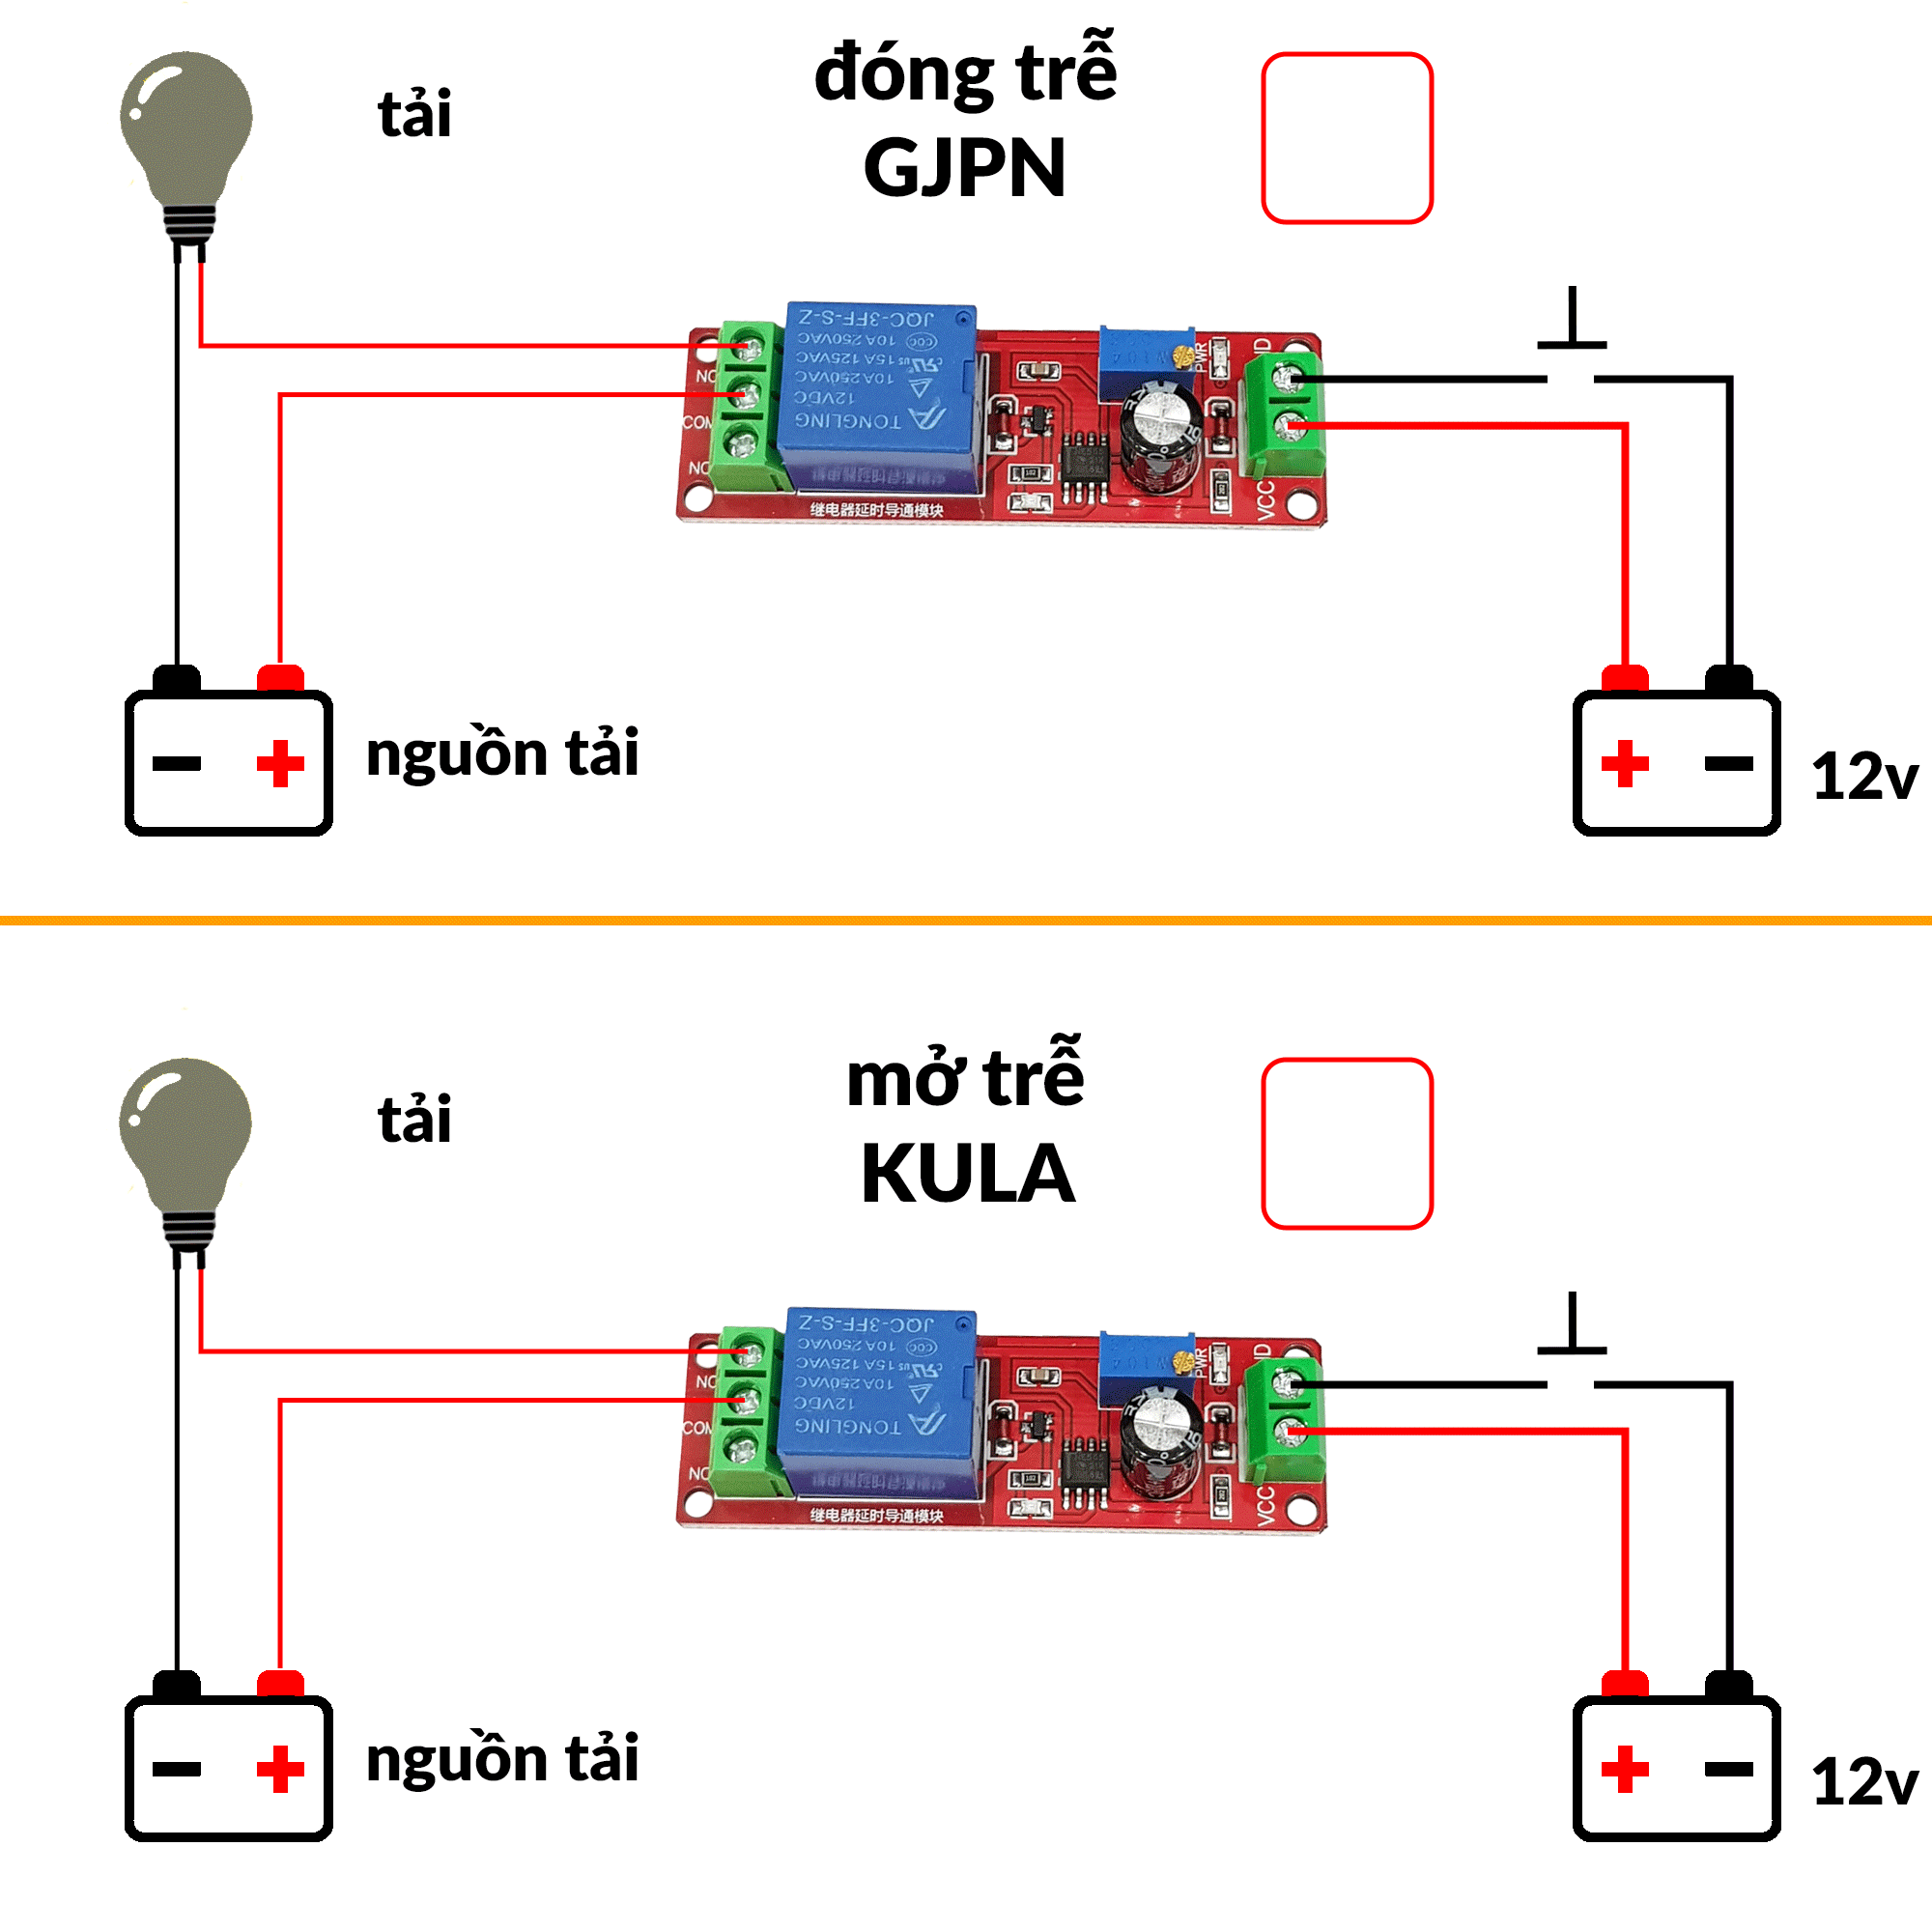 Module-relay-tao-tre-dong-ngat-thiet-bi-dong-mo-tre-Dong-tre1